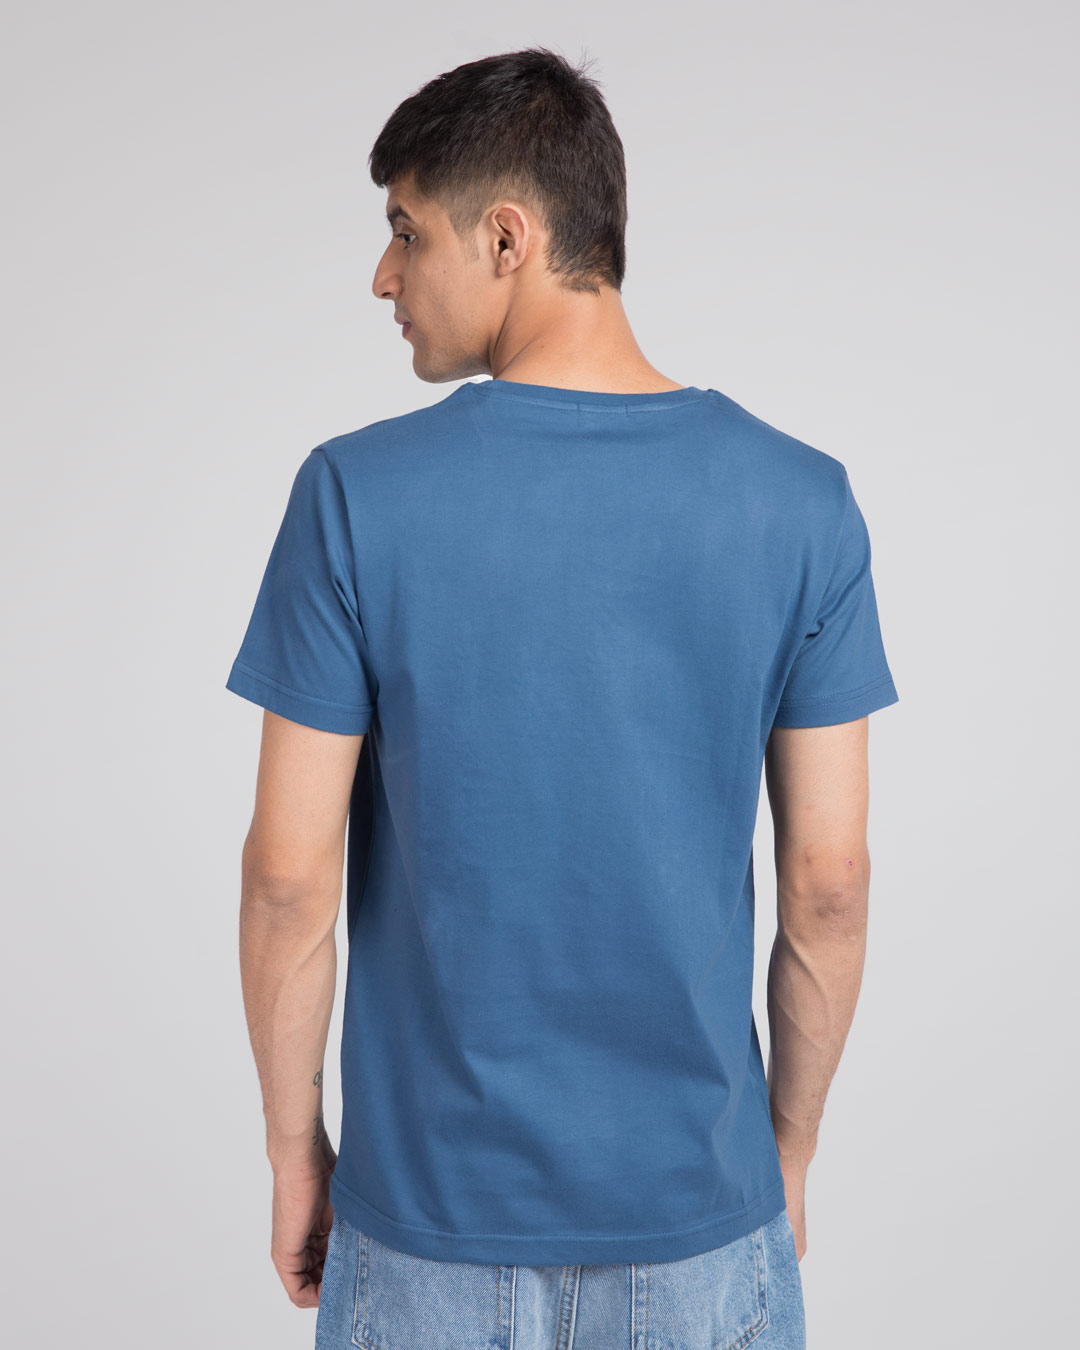 Shop Maybe I Won't Half Sleeve T-Shirt (LTL) Prussian Blue New-Back